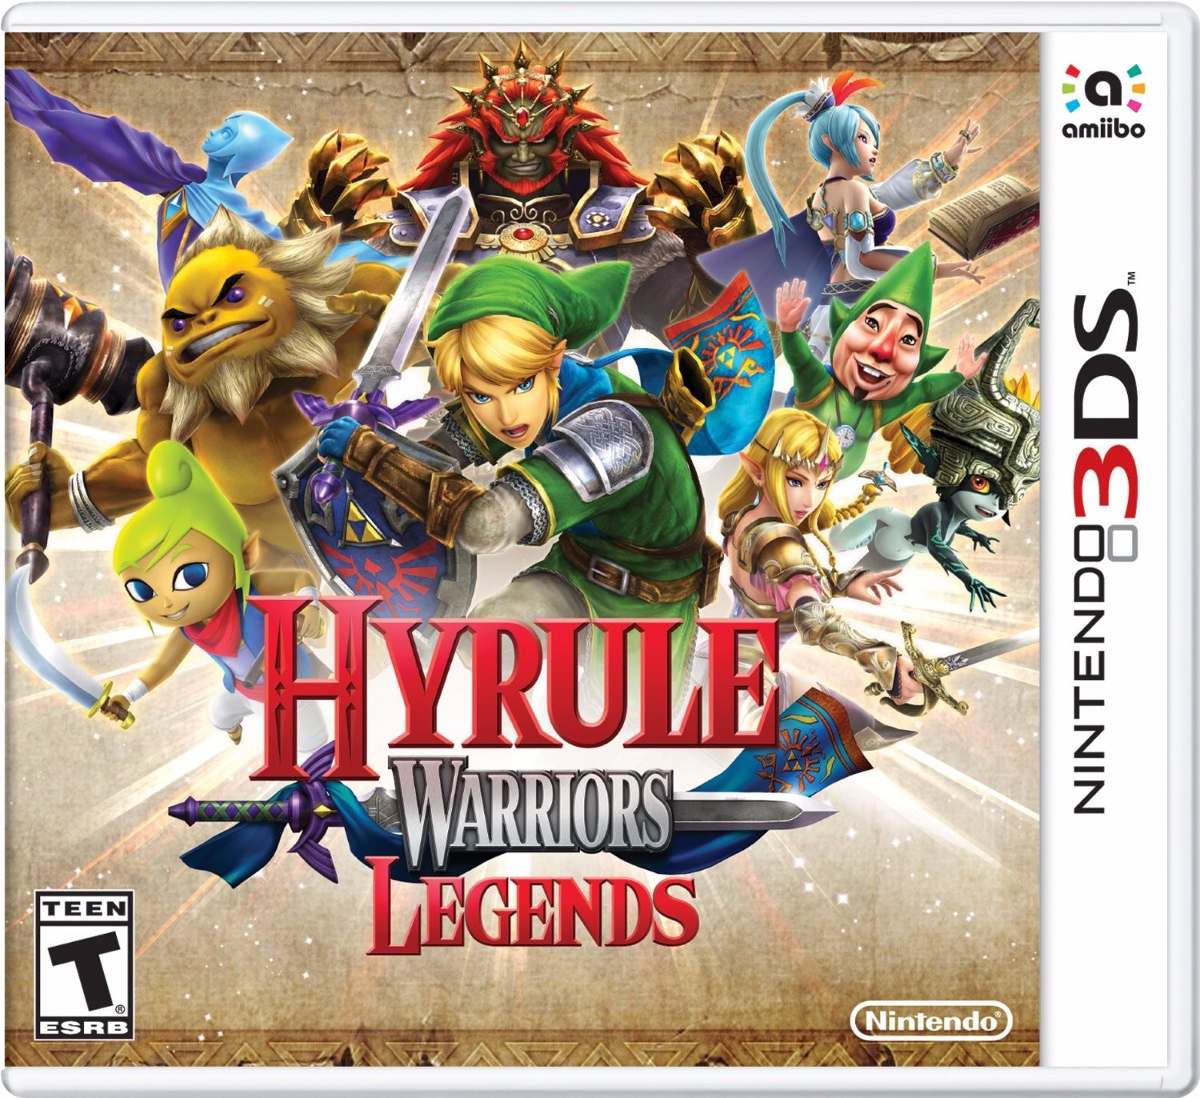 Hyrule Warriors Legends - Nintendo 3ds - New 3ds - 2ds ...